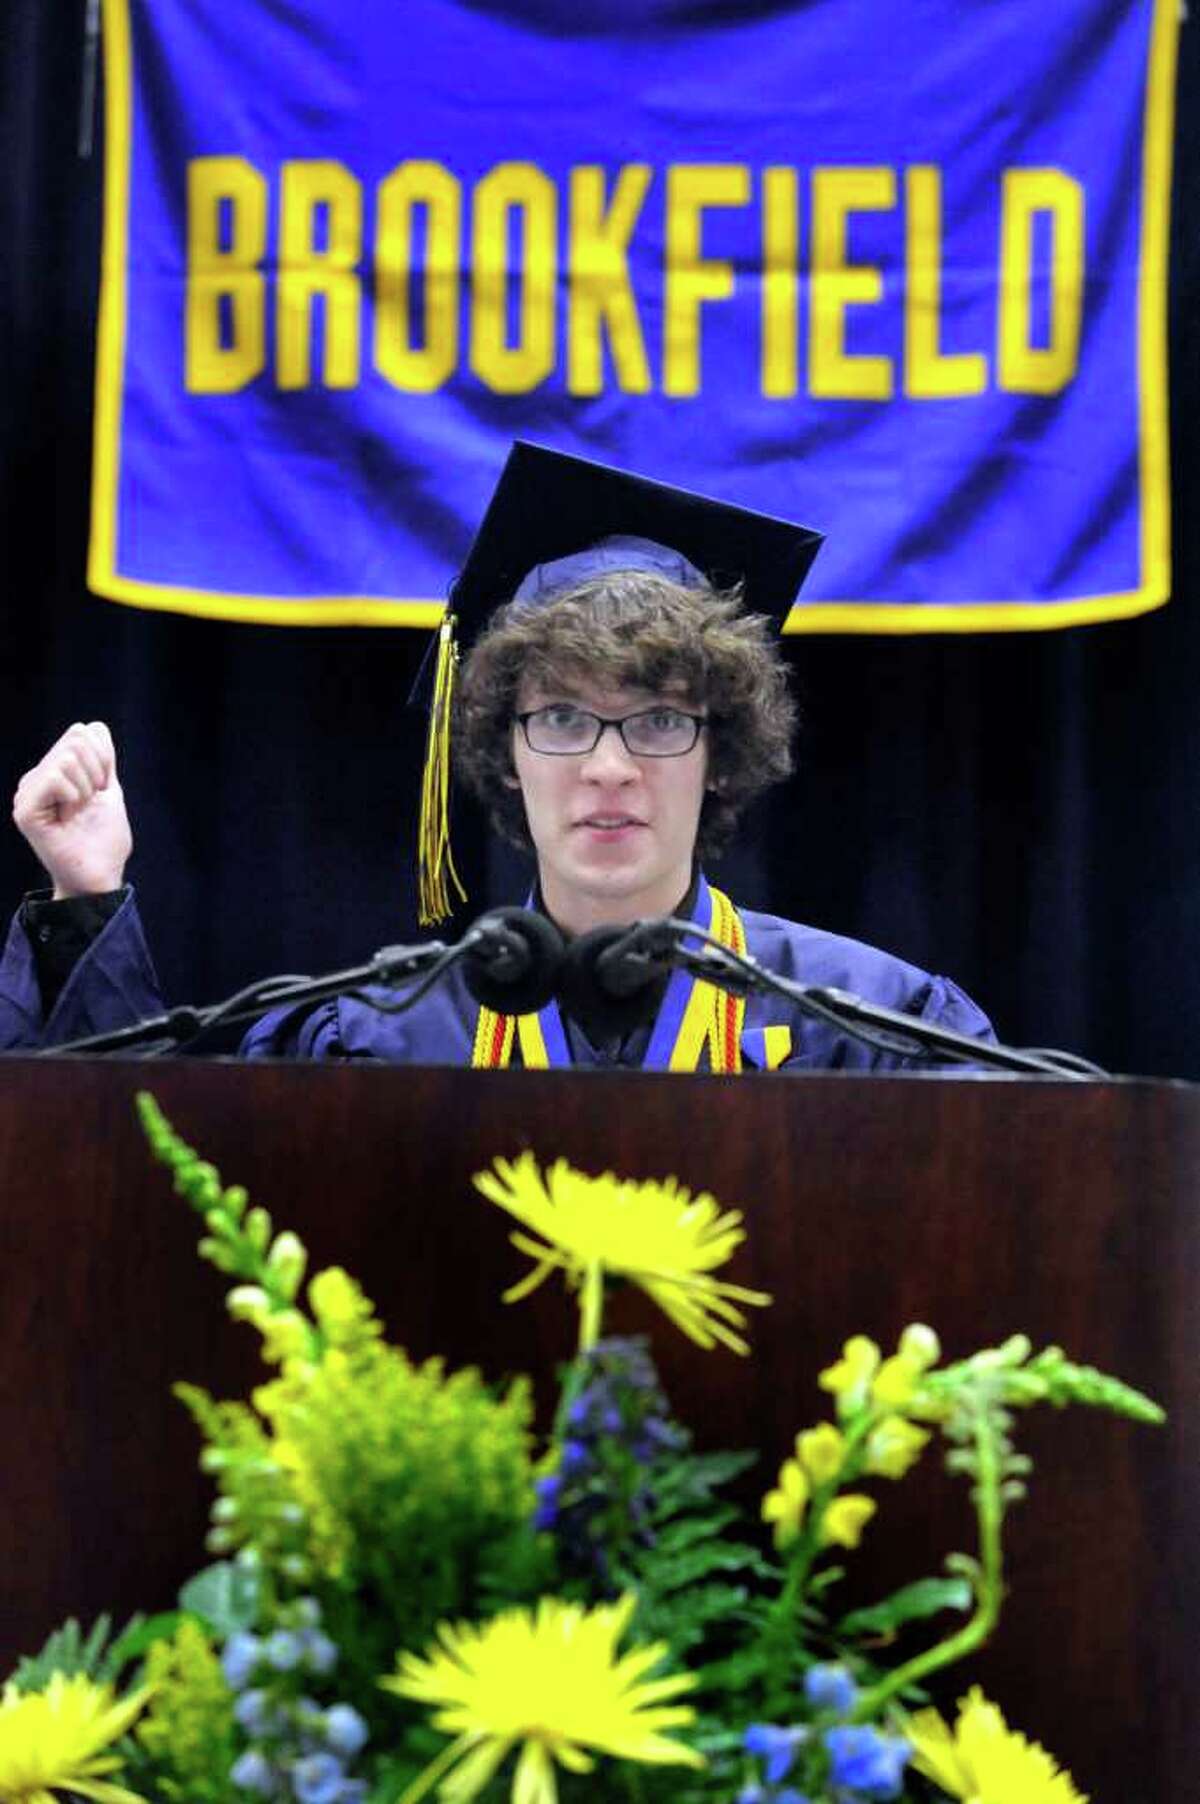 Matthew Goodrich, valedictorian, speaks at Brookfield High School's graduation held at Western Connecticut State University's O'Neill Center in Danbury, Saturday, June 18, 2011.